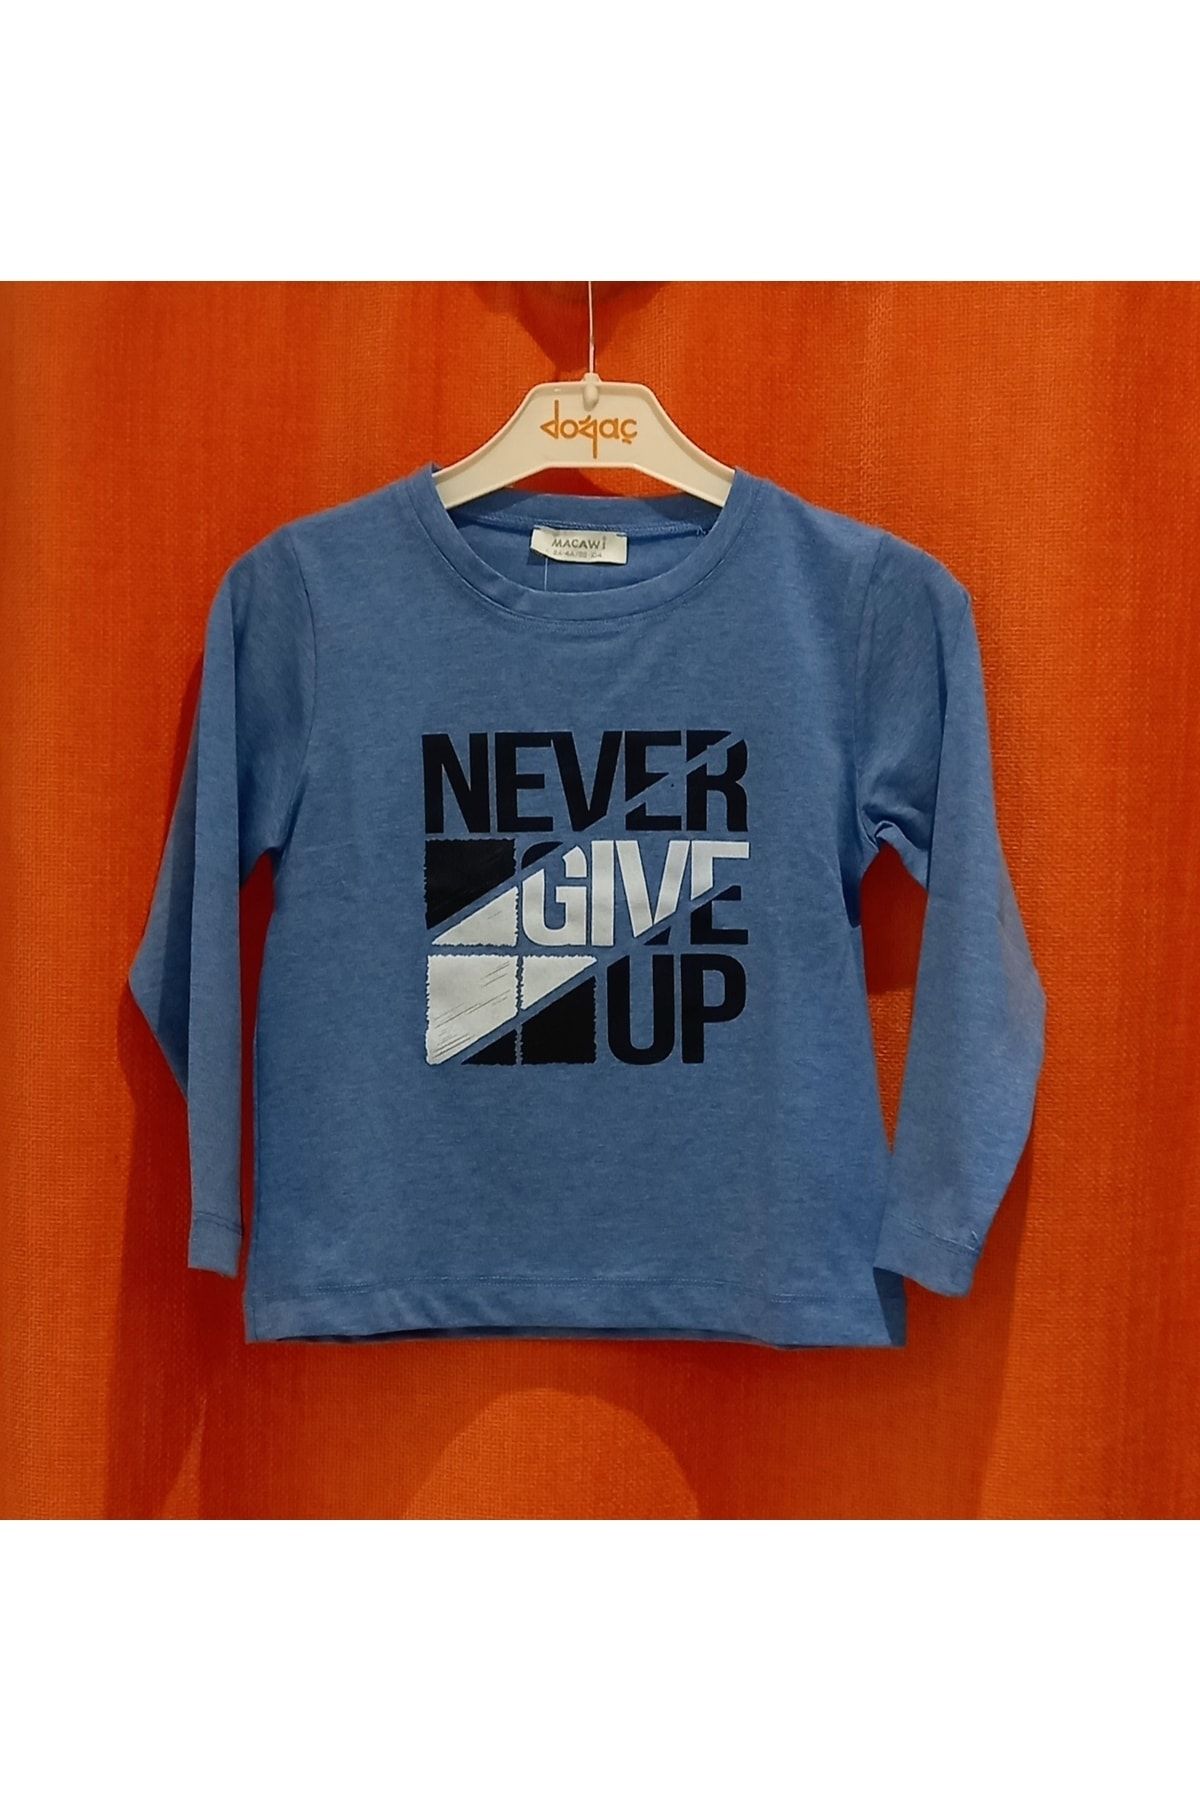 Macawi Never Give Up Baskılı Ince Sweatshirt İndigo 4-5 Yaş